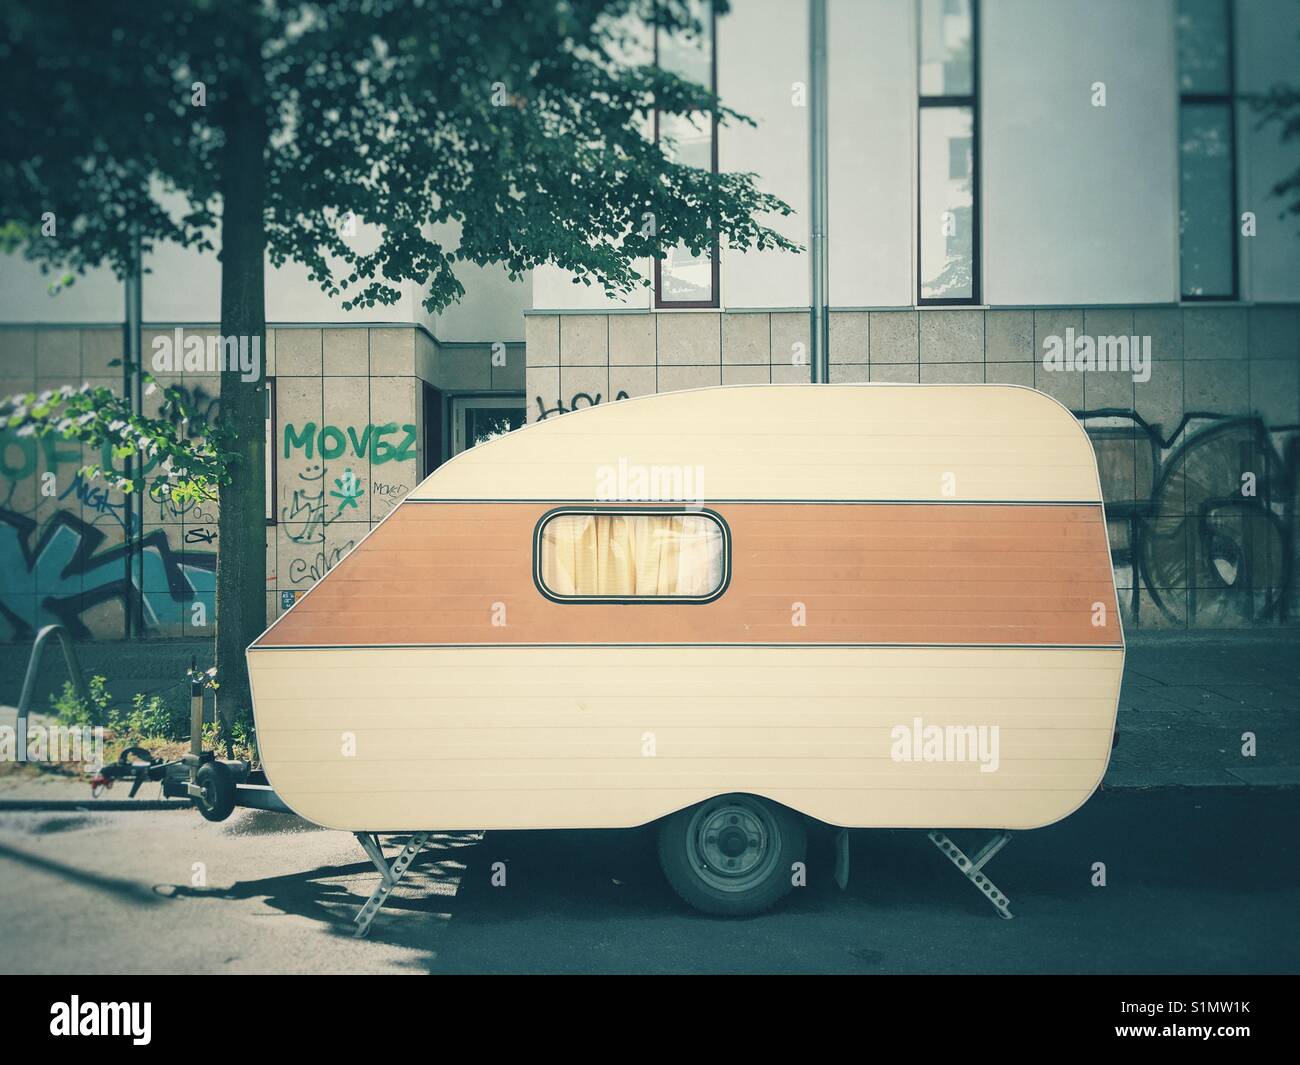 A caravan parked on a city street Stock Photo